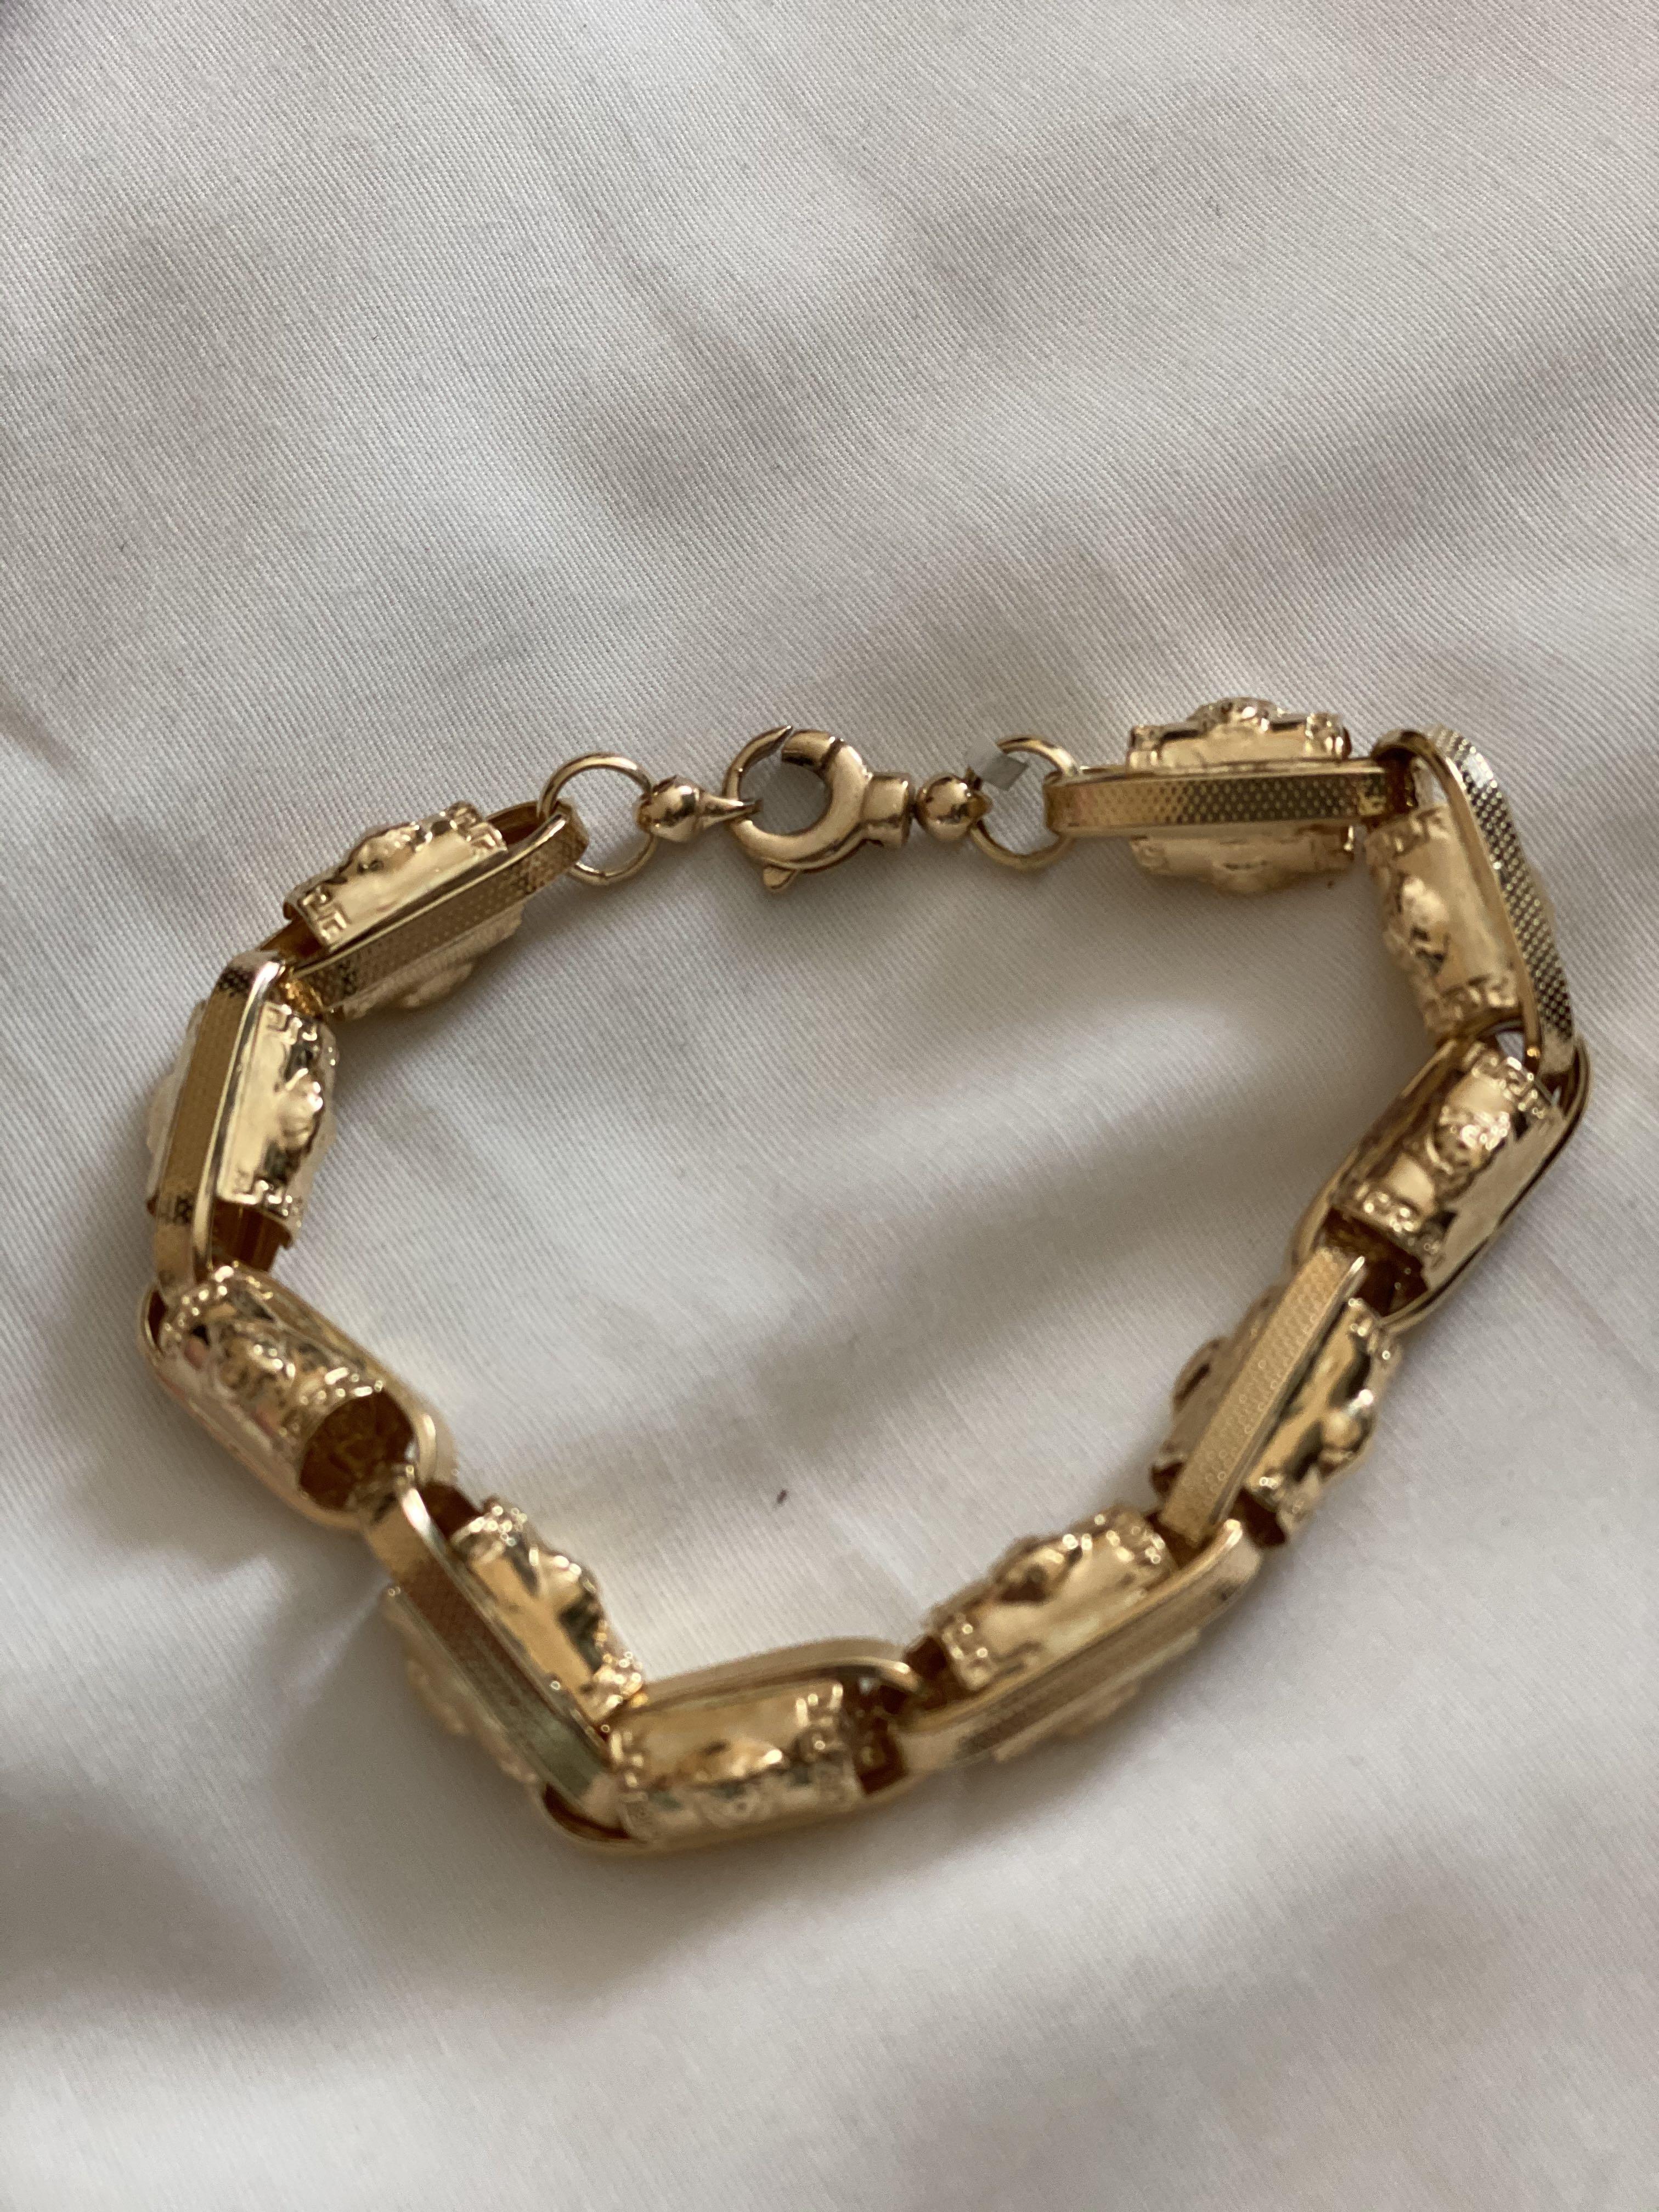 18k Yellow Gold Filled Hollow Filigree Dubai Engagement 24k Gold Bangle  Bracelet Bracelet Luxury Womens Jewelry From Blingfashion, $17.26 |  DHgate.Com